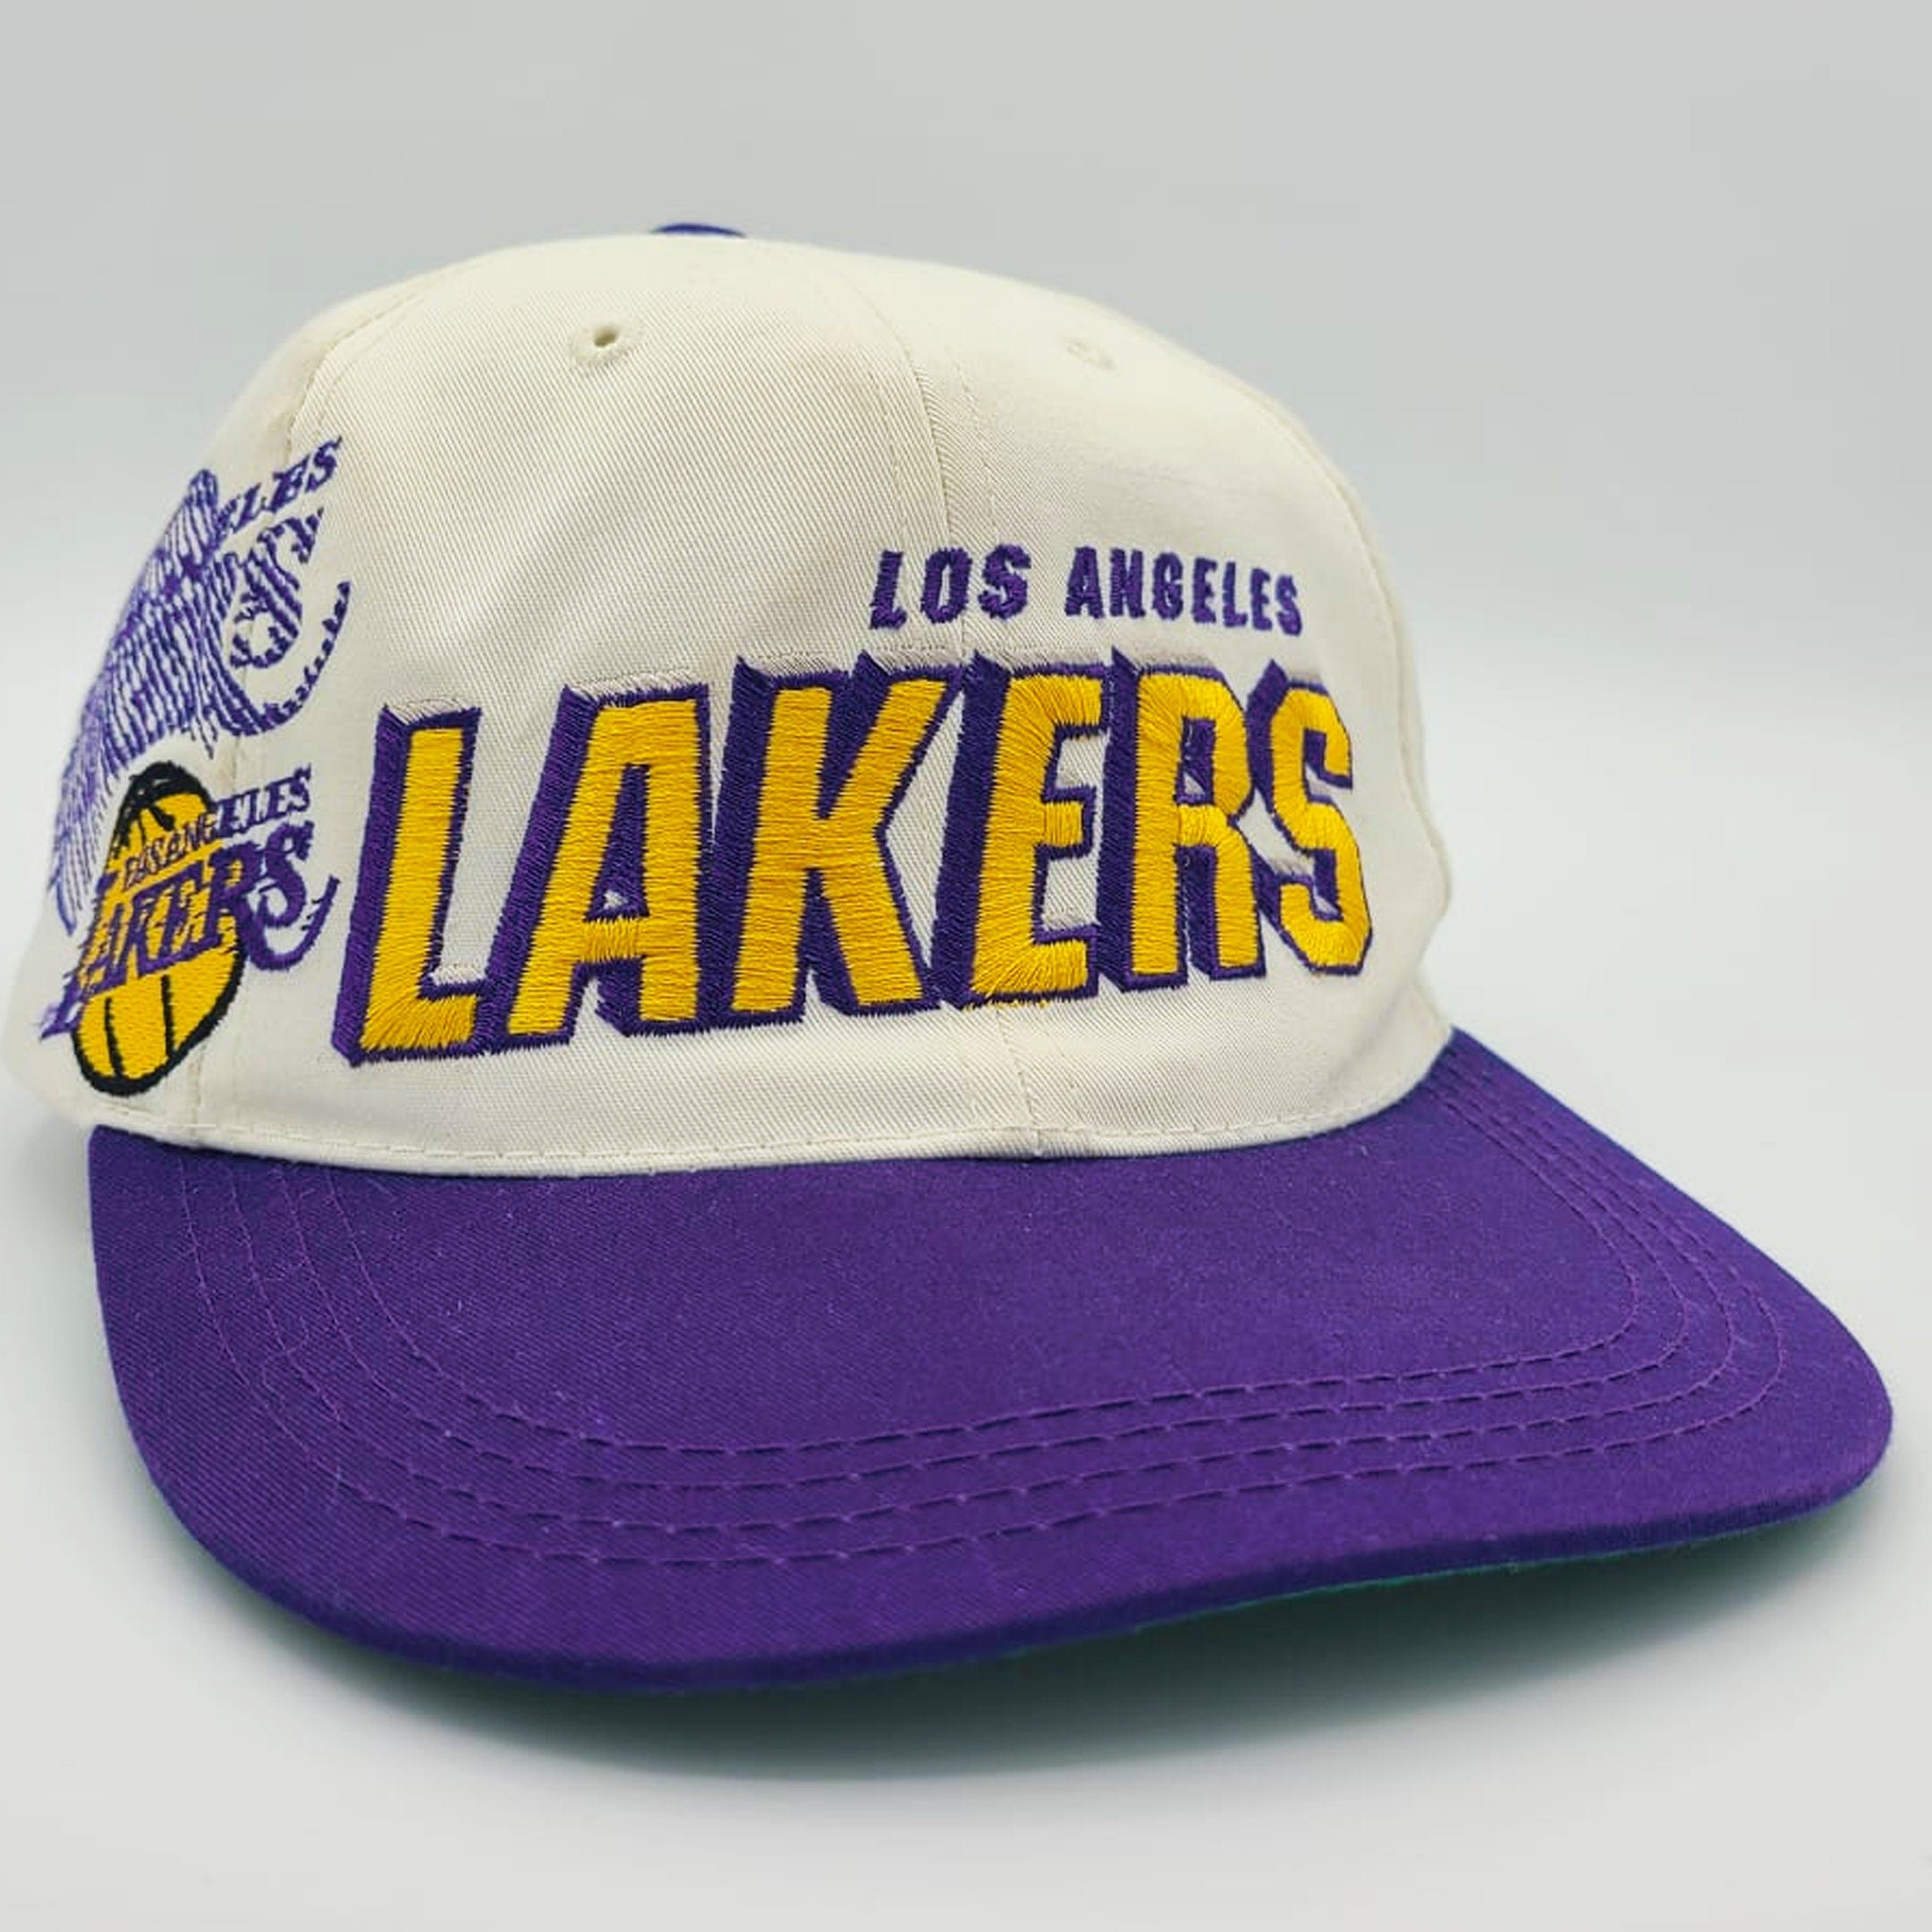 Vintage Los Angeles Lakers/Adidas Snapback Official NBA Draft Cap